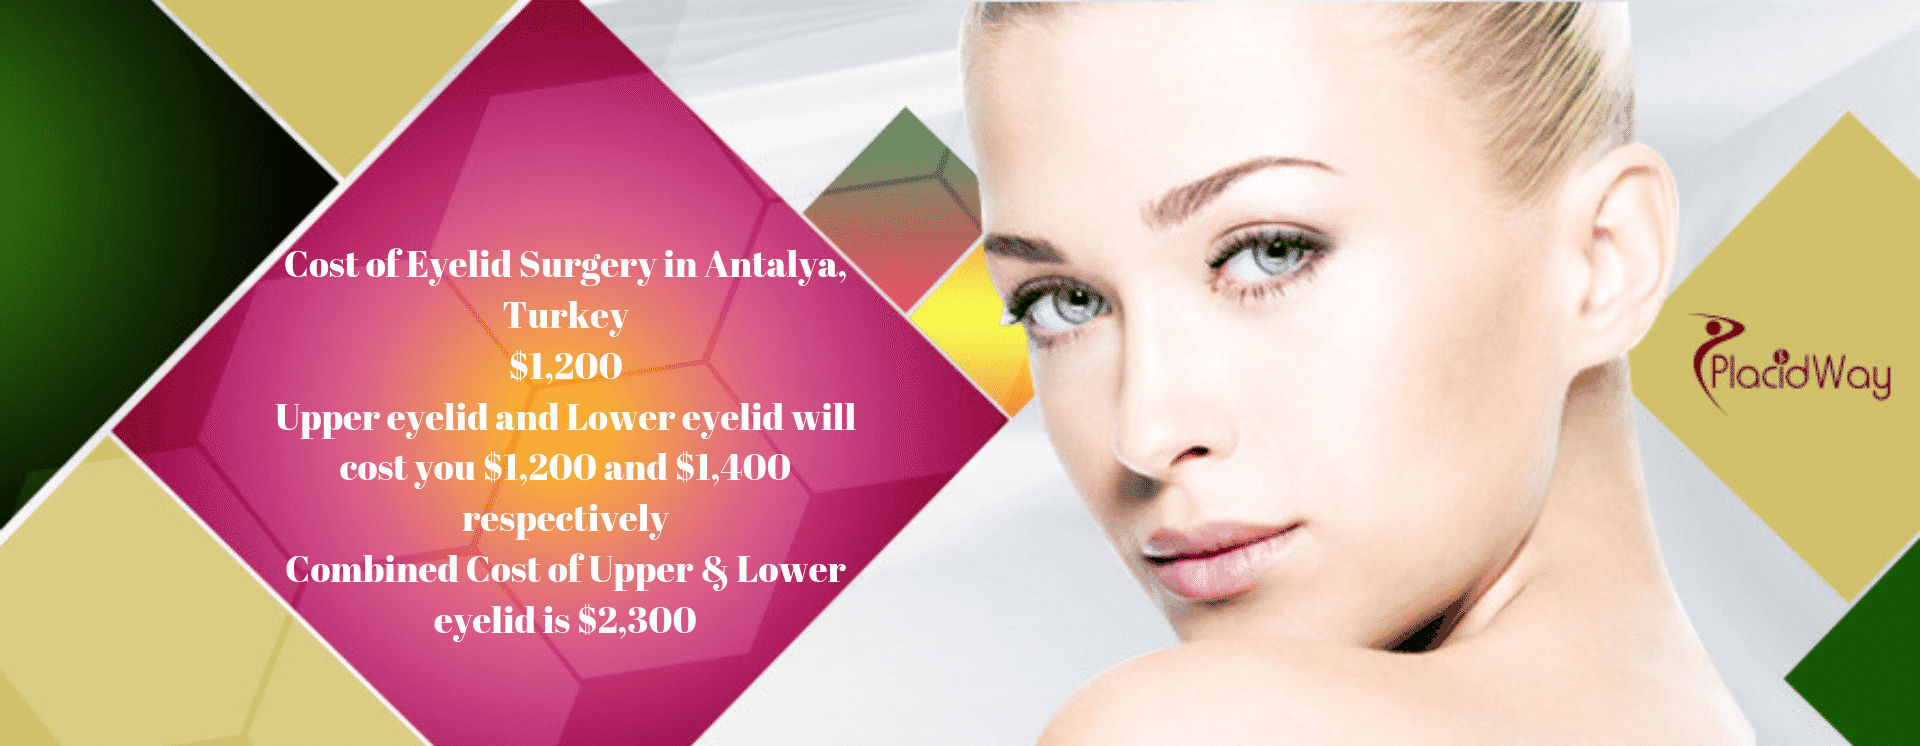 Cost of Eyelid Surgery in Antalya, Turkey